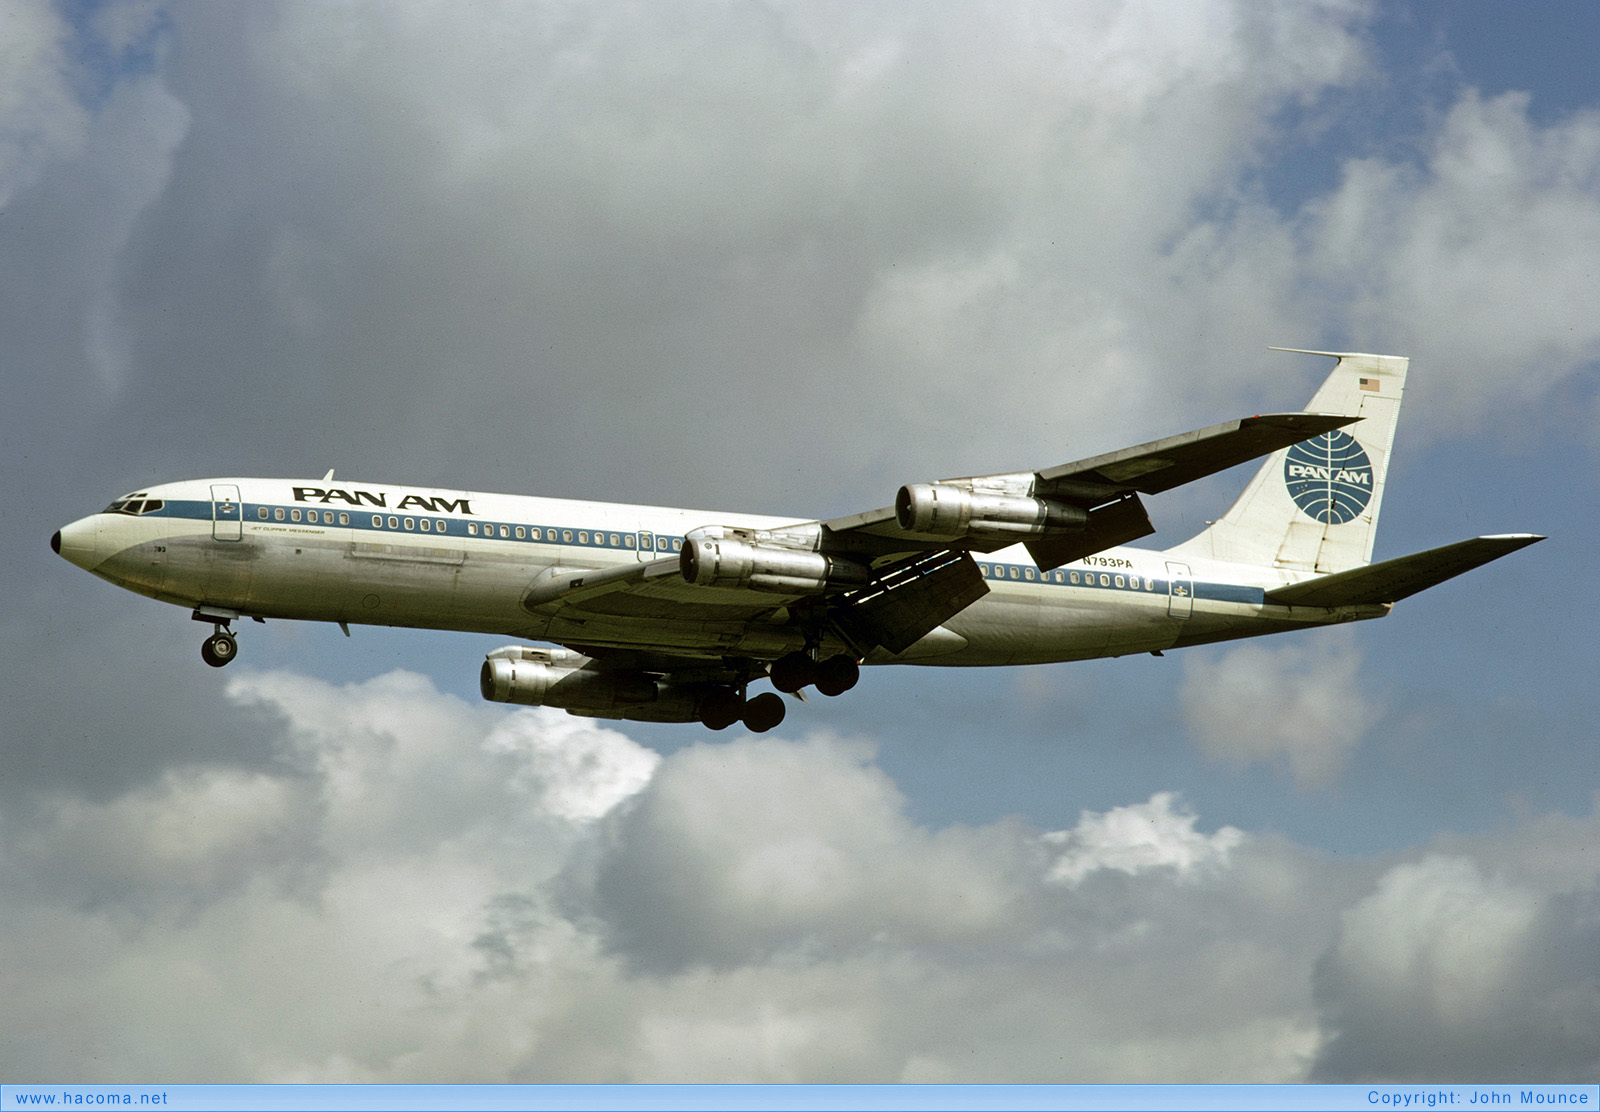 Photo of N793PA - Pan Am Clipper Messenger - London Heathrow Airport - Apr 30, 1975